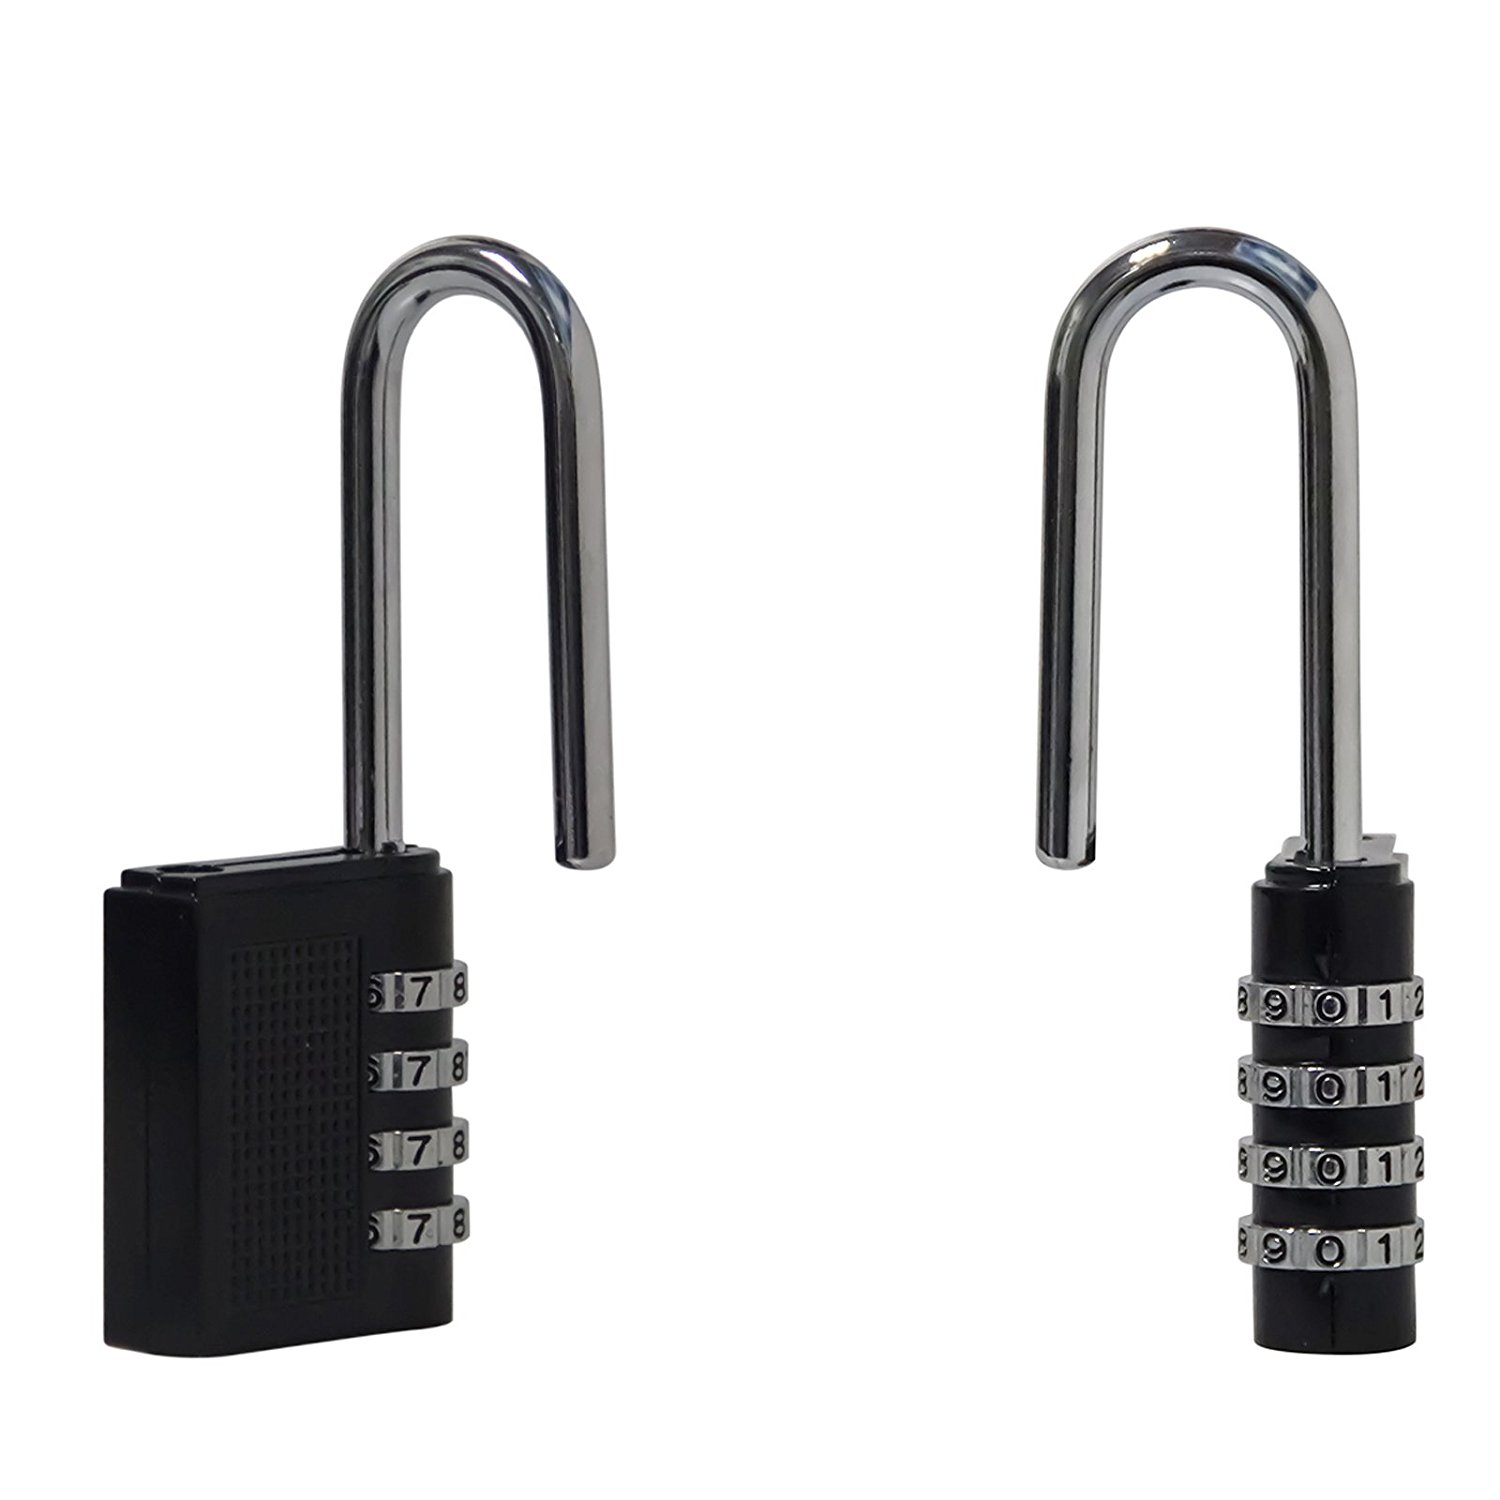 ONUEMP Combination Lock, 4 Digit Combination Padlock 2.5 Inch ...